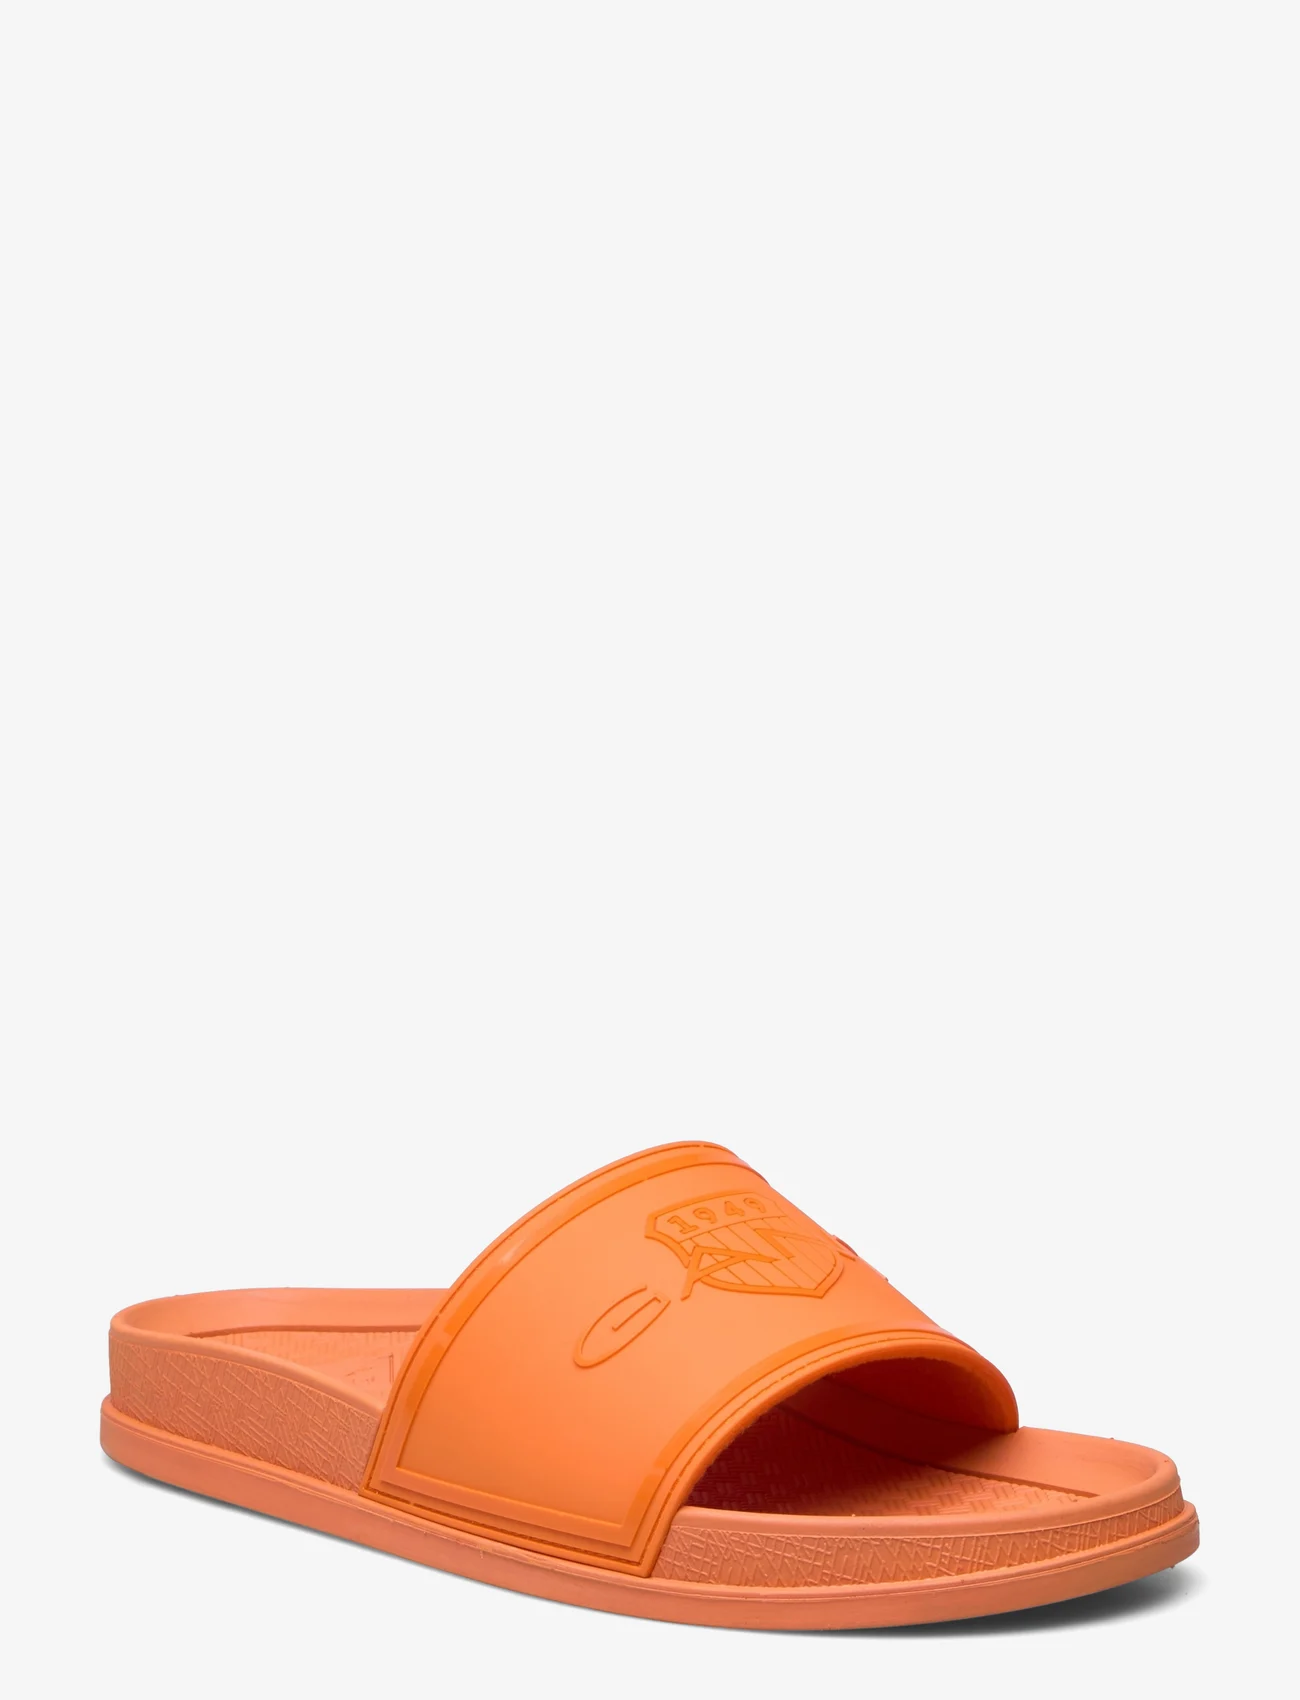 GANT - Beachrock Sport Sandal - pumpkin orange - 0